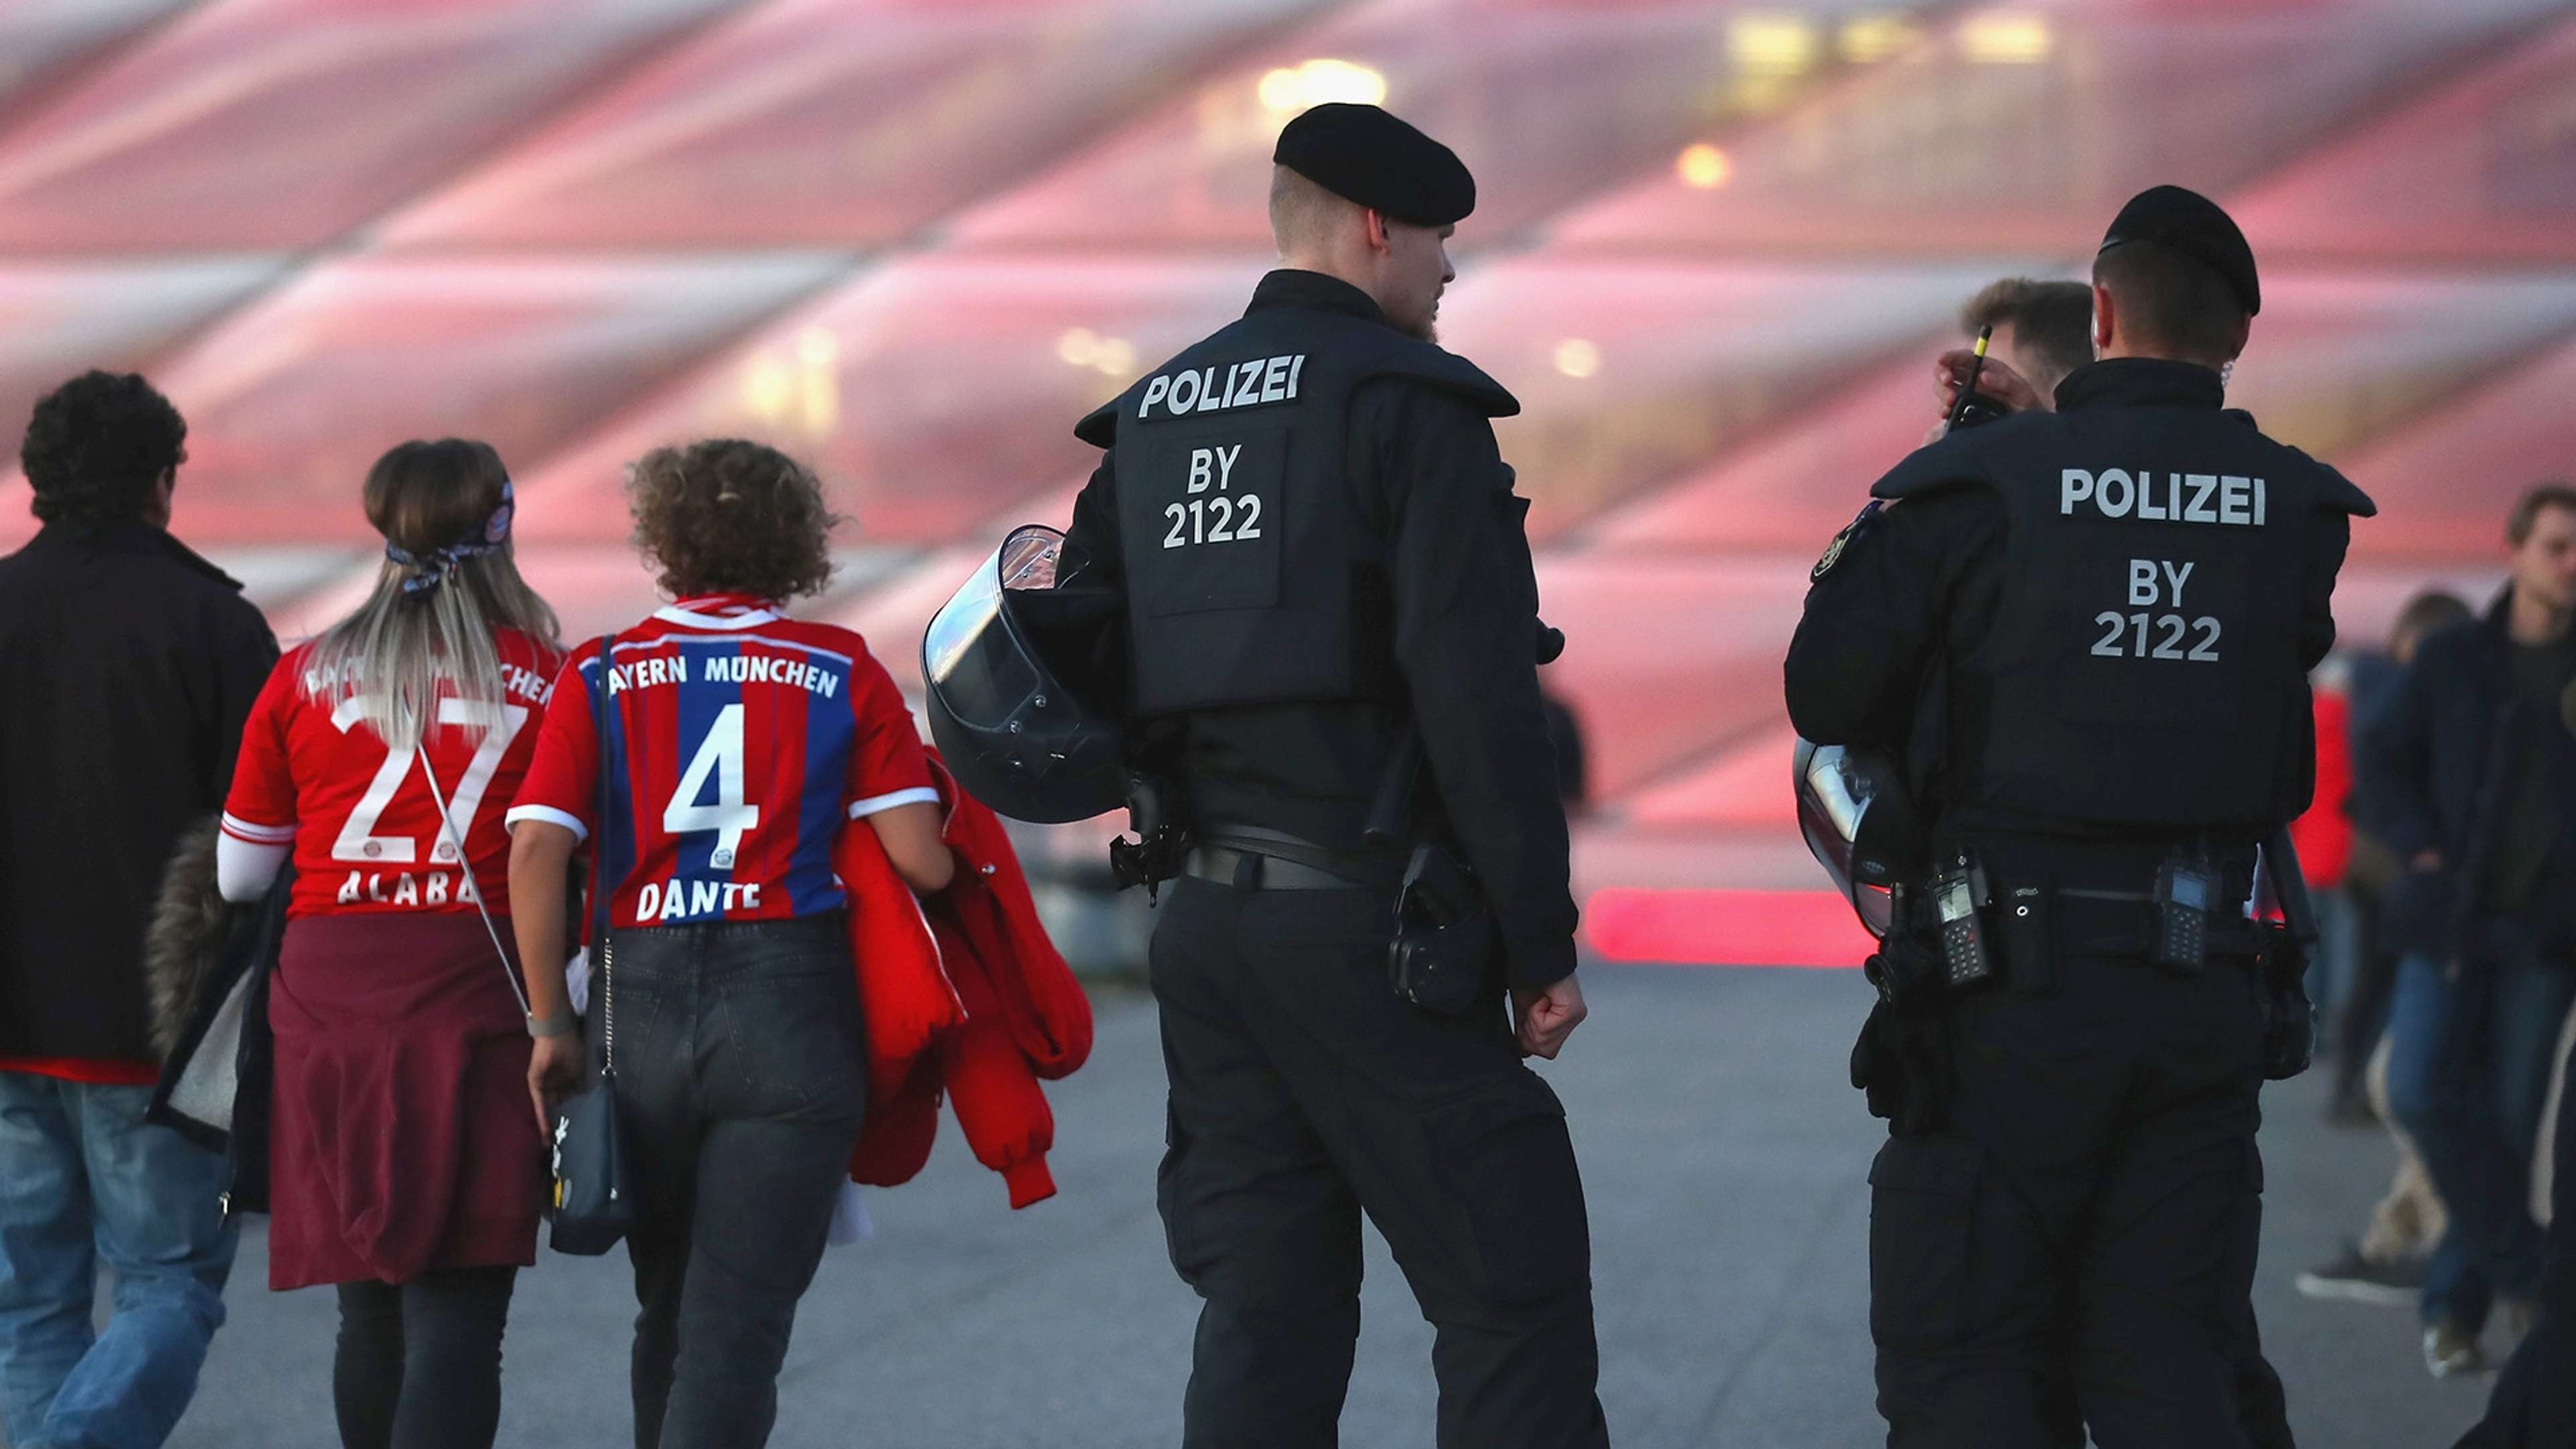 Police Bayern Munich fans